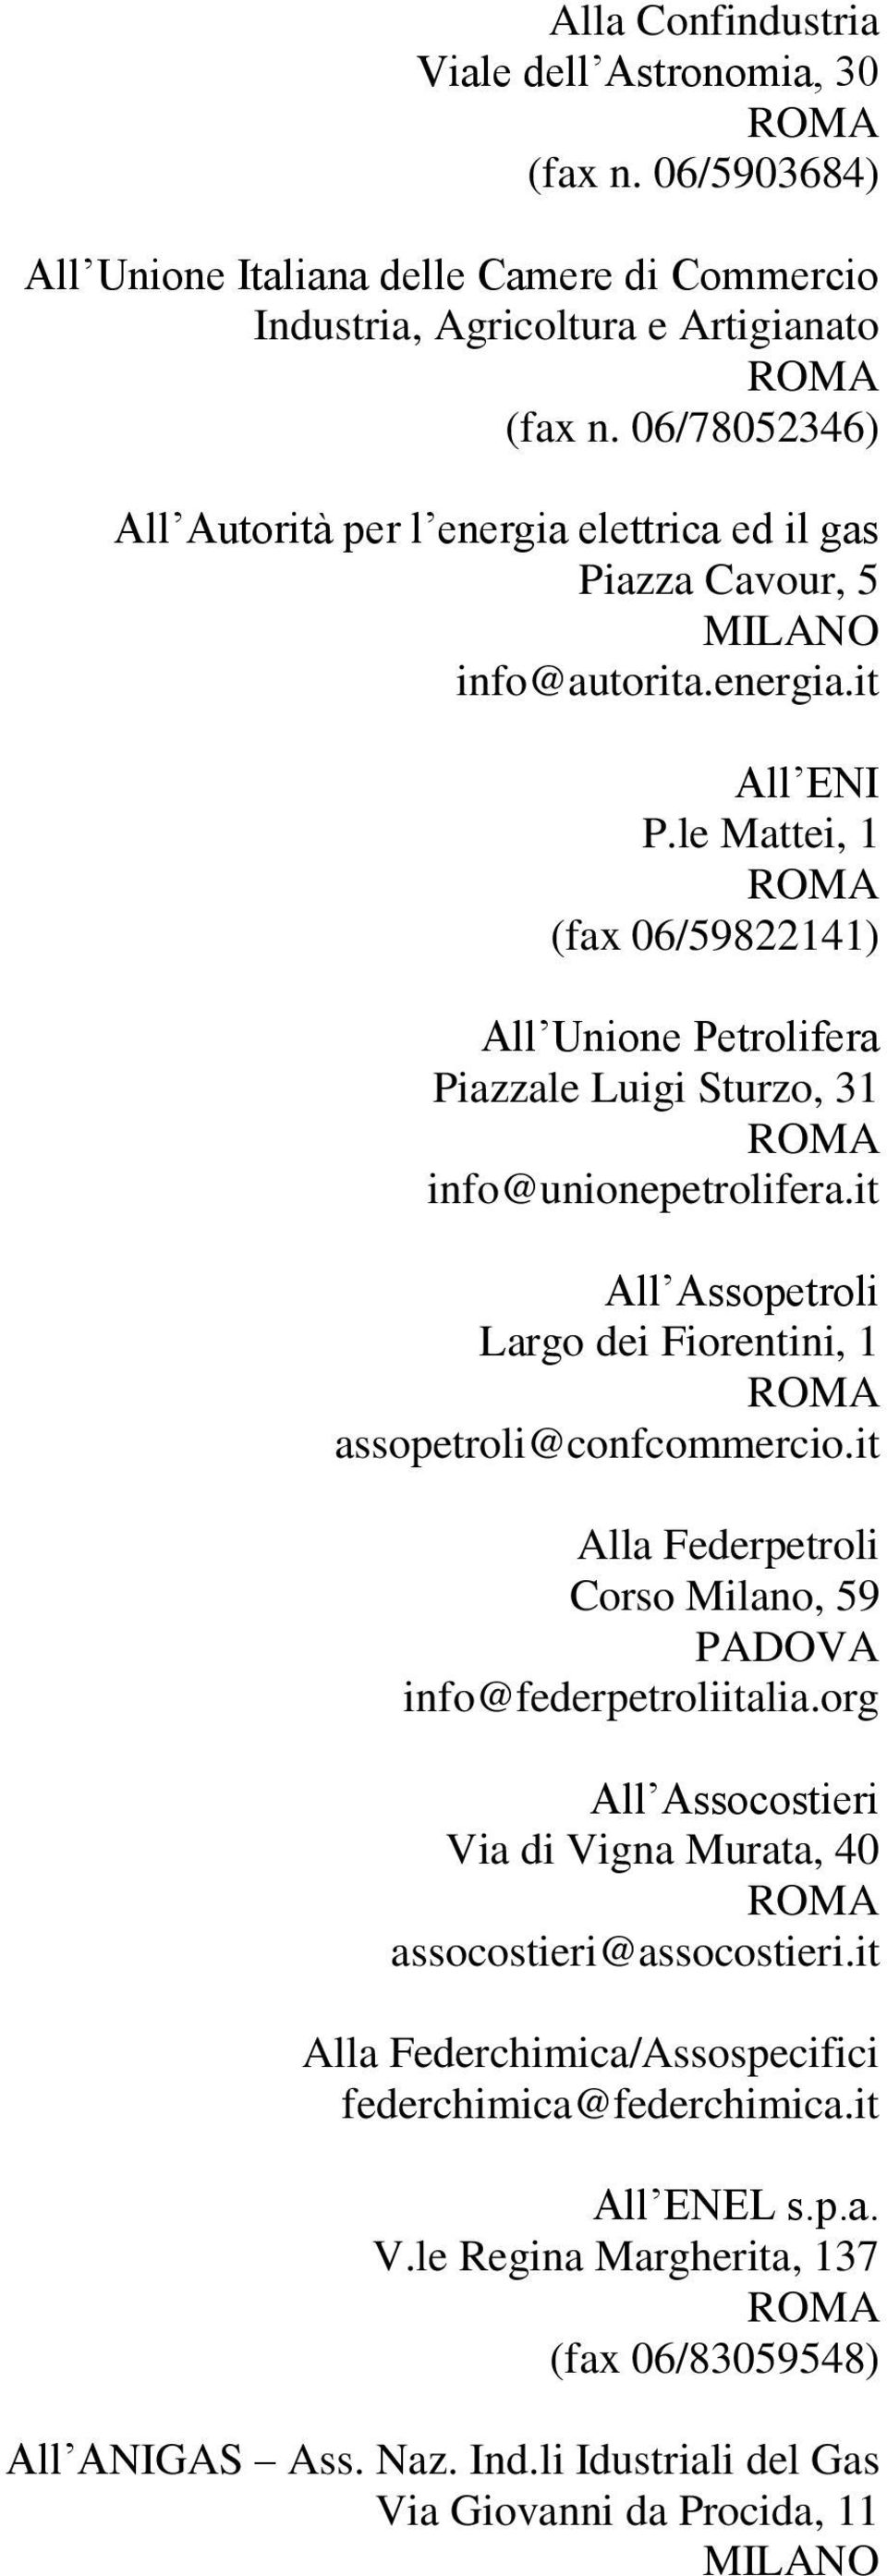 le Mattei, 1 (fax 06/59822141) All Unione Petrolifera Piazzale Luigi Sturzo, 31 info@unionepetrolifera.it All Assopetroli Largo dei Fiorentini, 1 assopetroli@confcommercio.